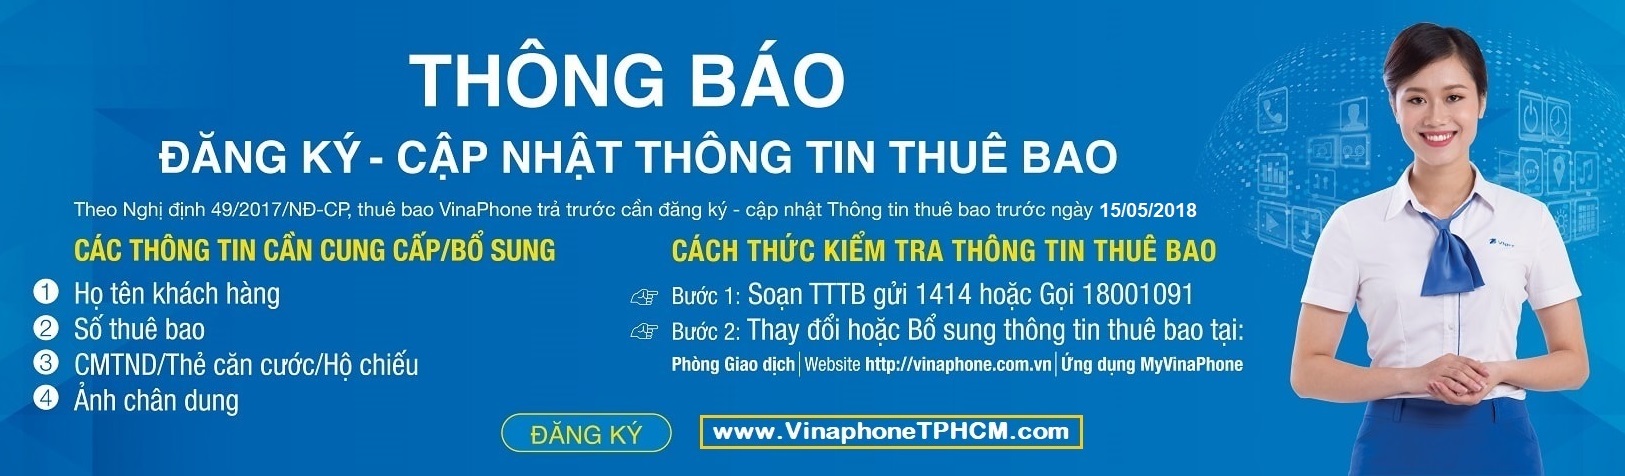 dang_ky_thong_tin_thue_bao_tra_truoc_vinaphone